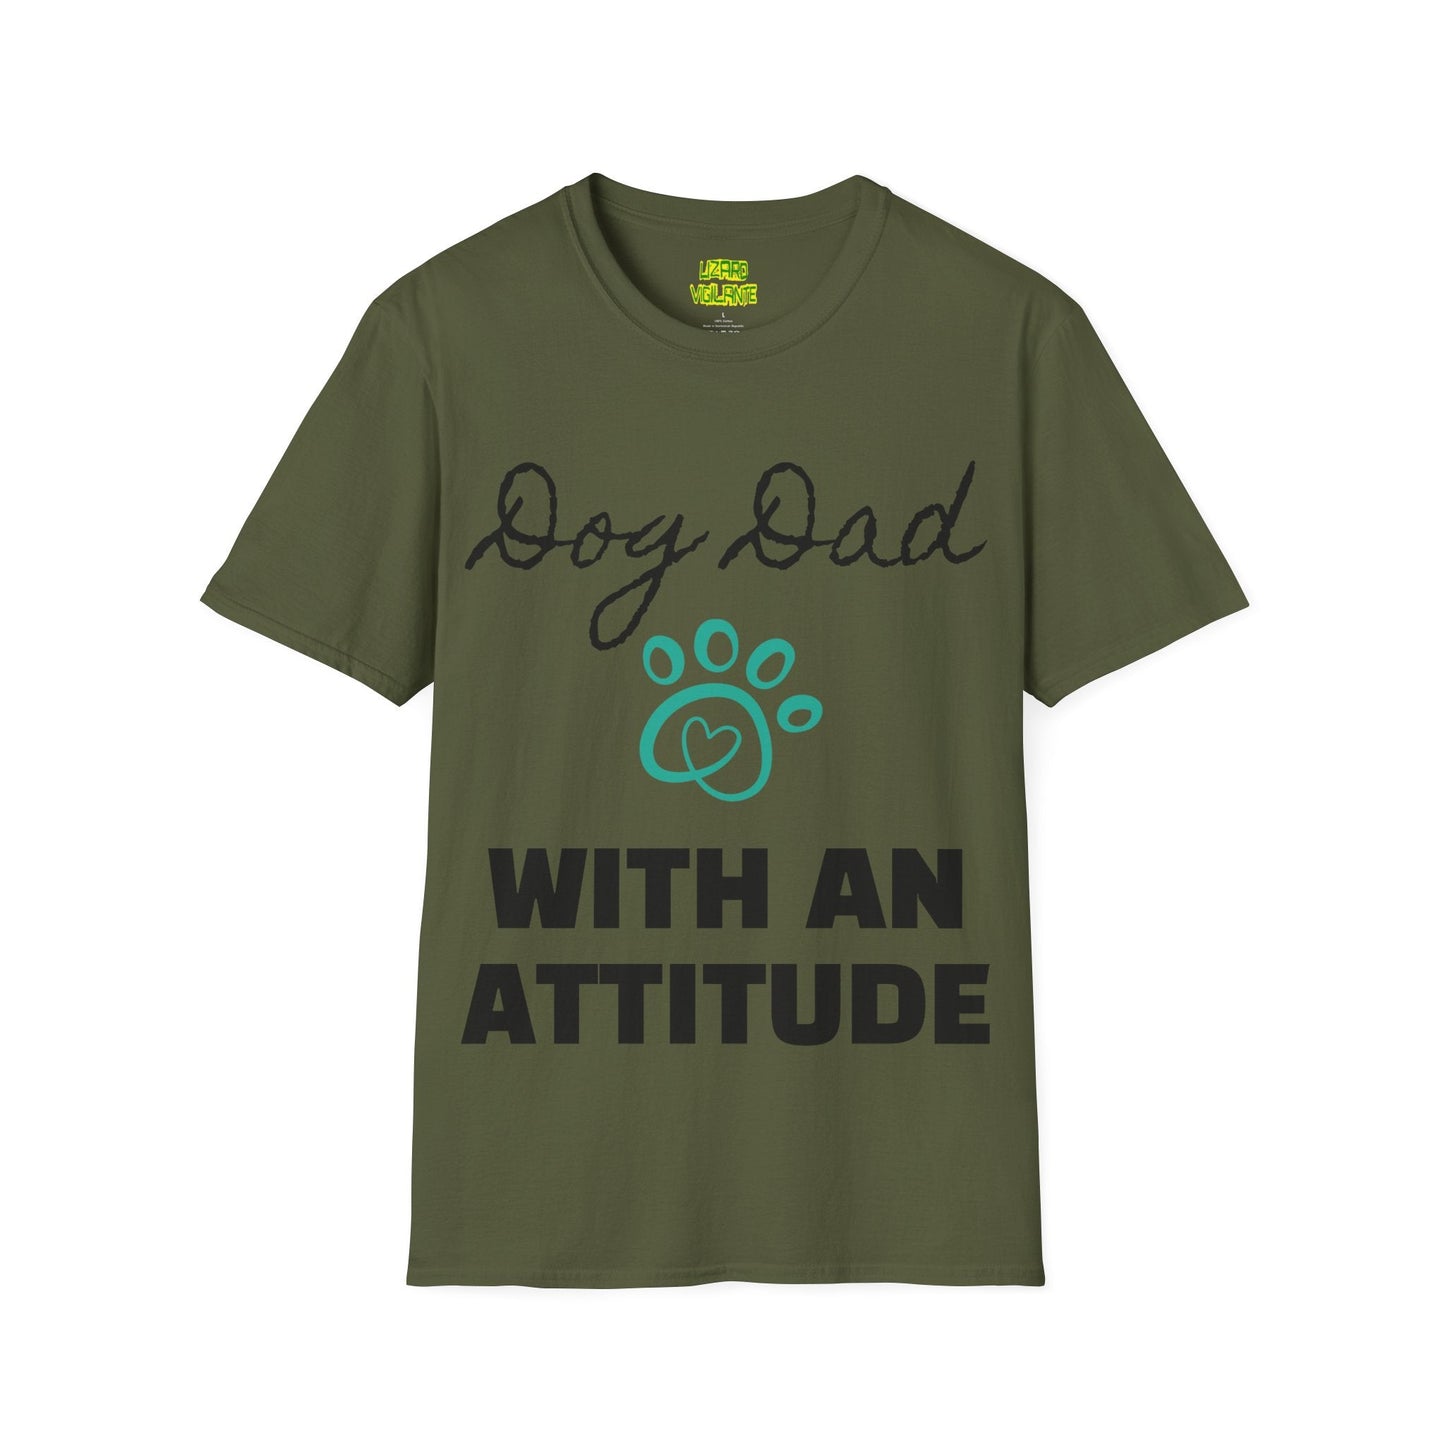 Dog Dad WITH AN ATTITUDE Unisex Softstyle T-Shirt - Lizard Vigilante